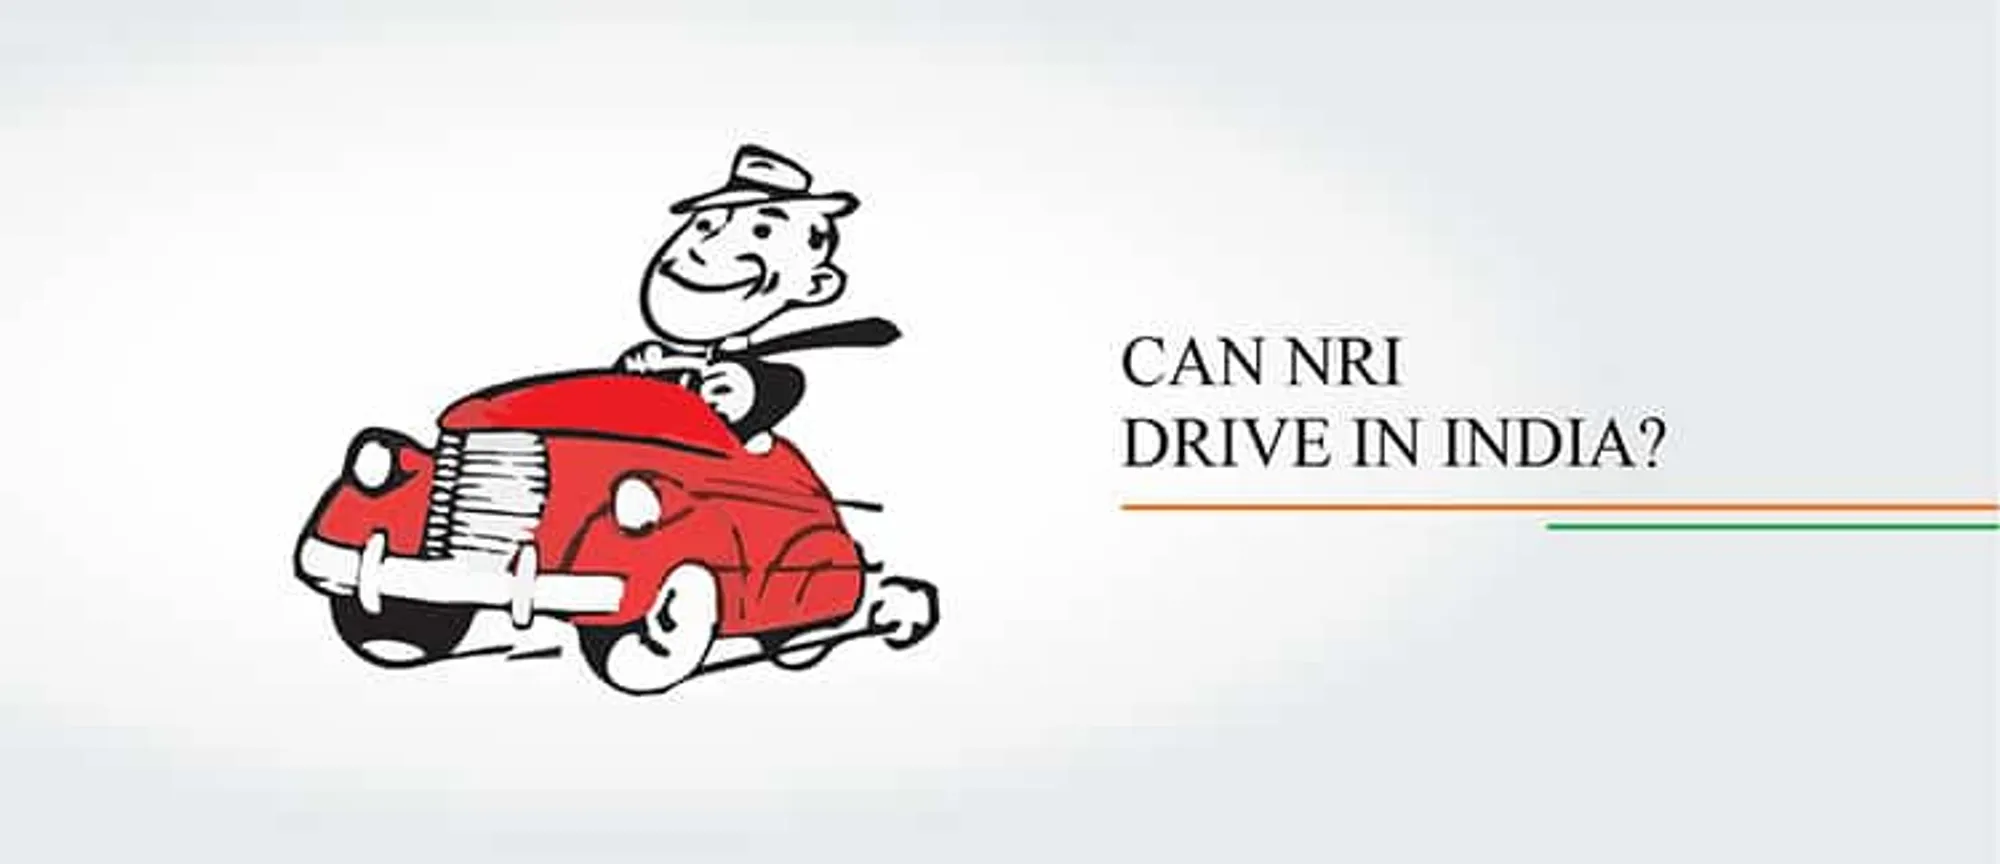 CAN NRI DRIVE IN INDIA